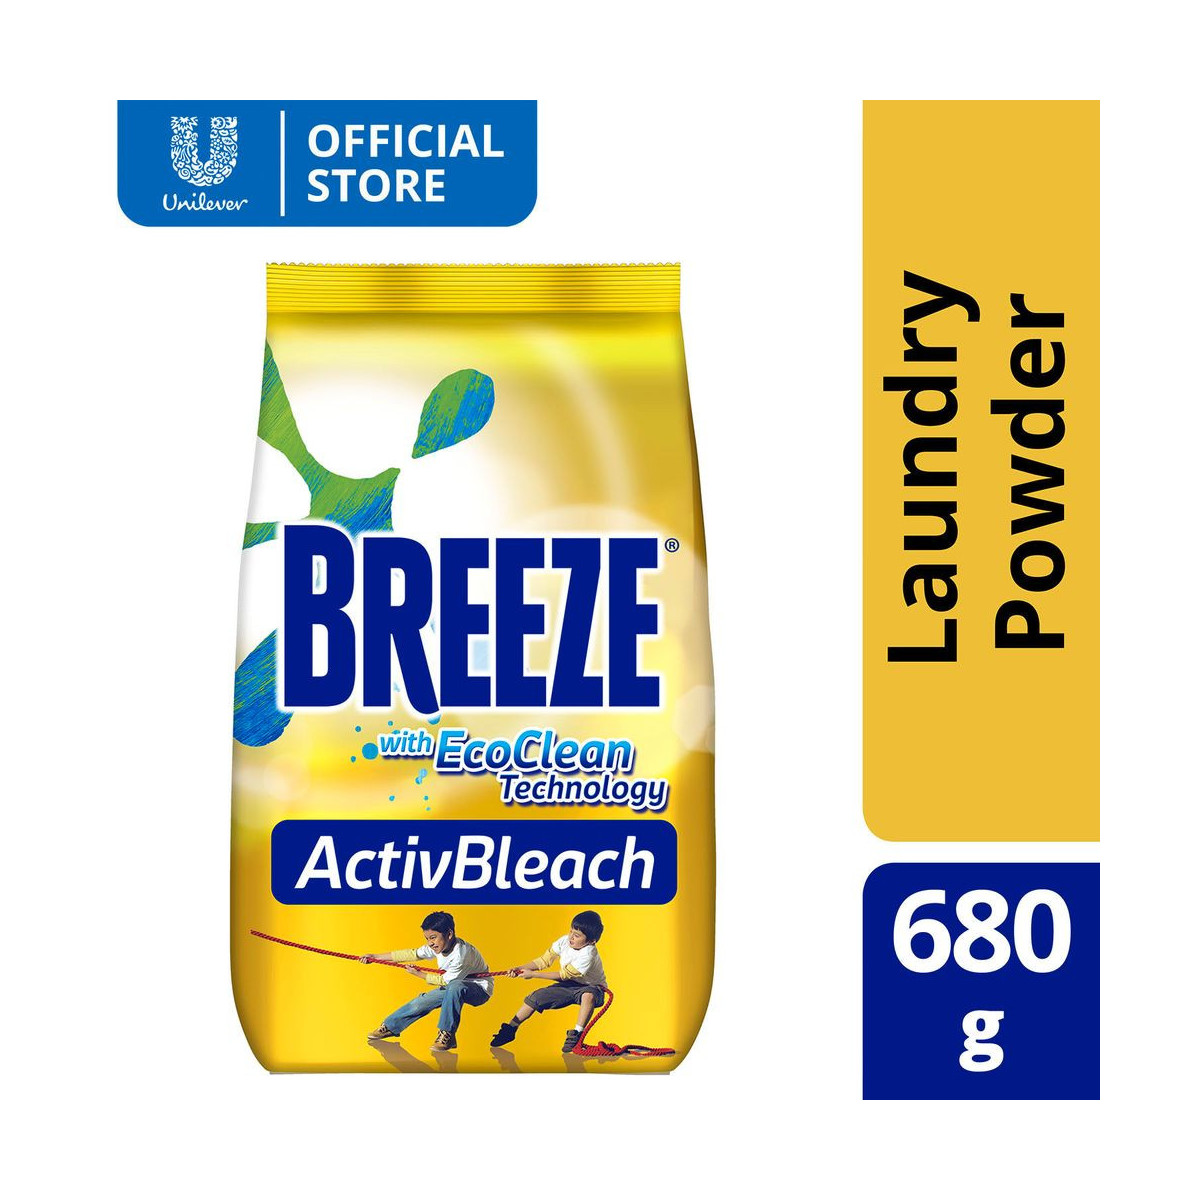 Breeze Powder Detergent ActivBleach with EcoClean Technology 680G Pouch